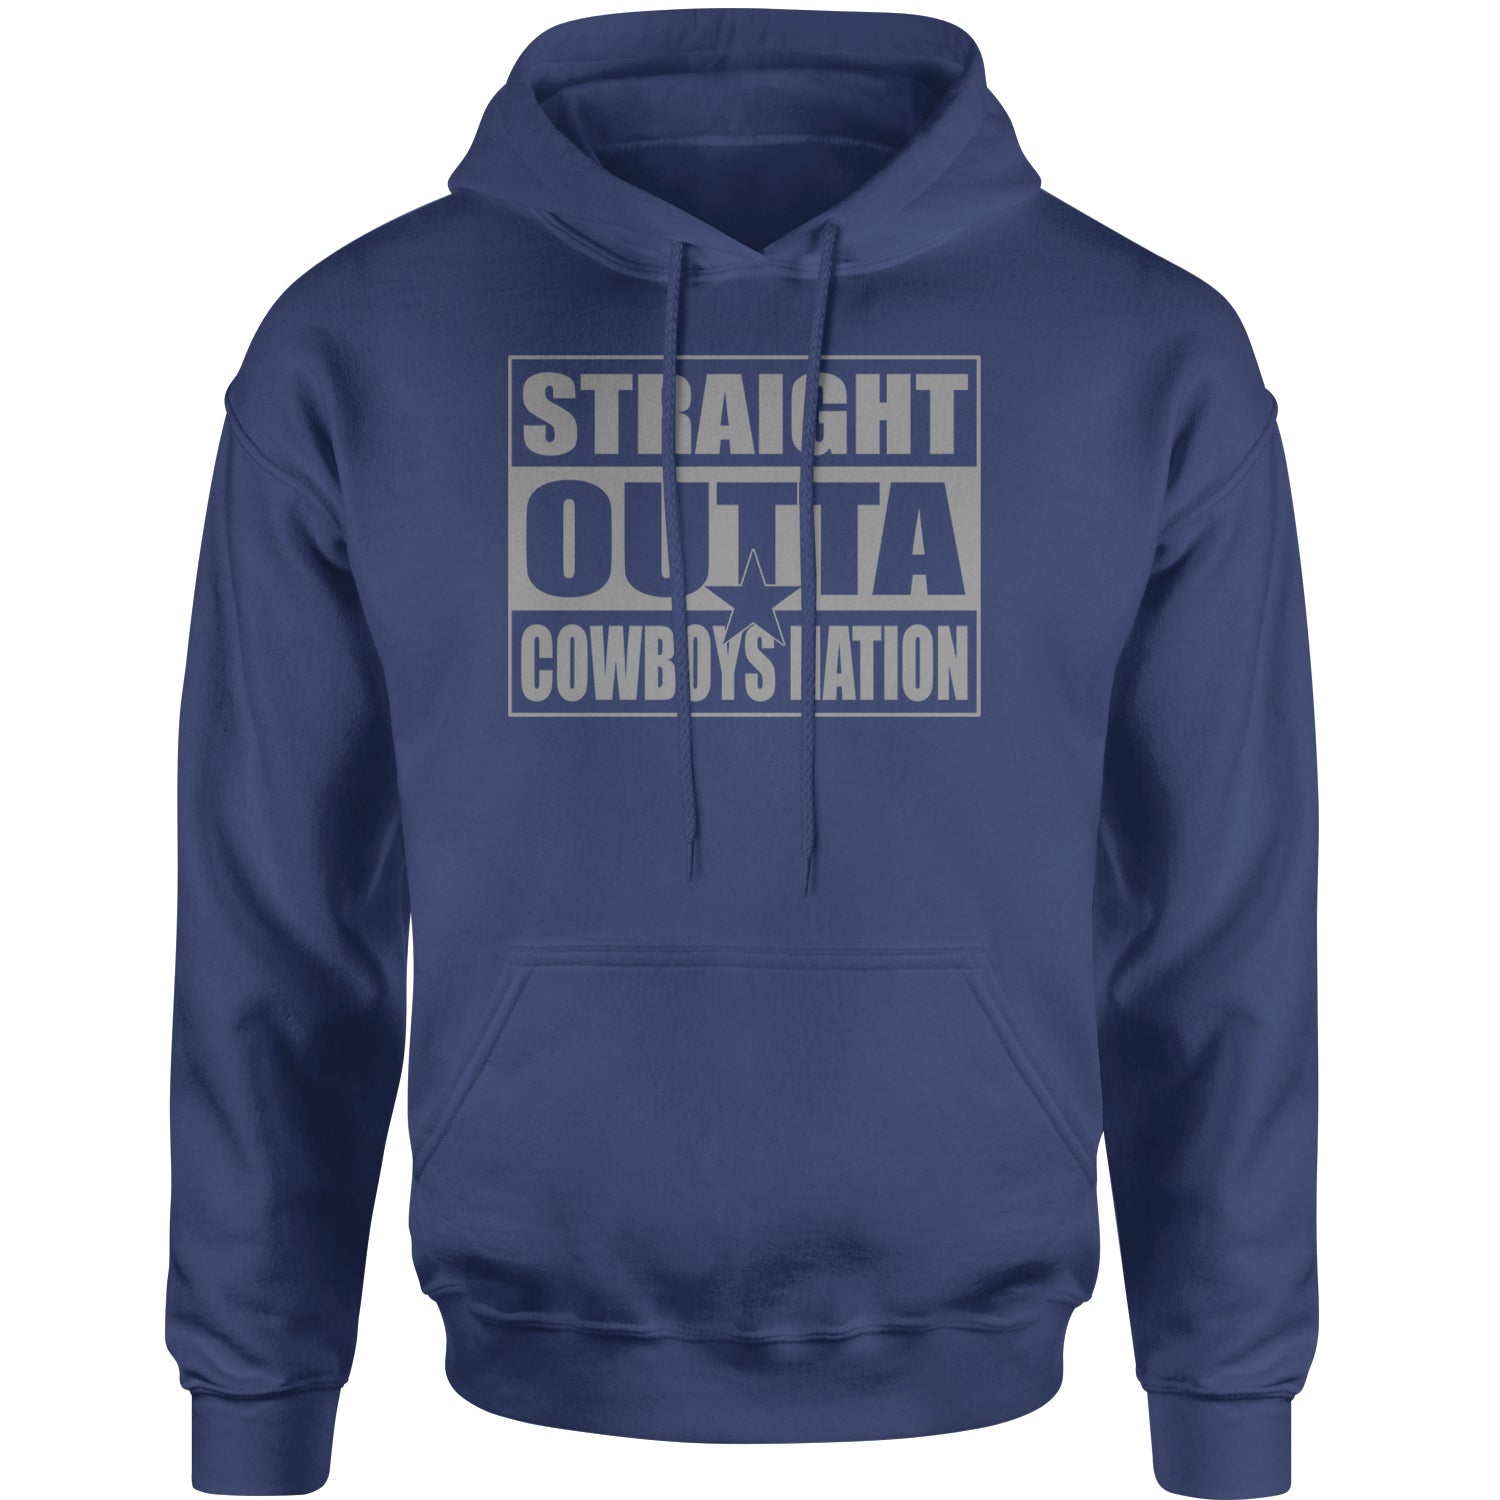 Straight Outta Cowboys Nation   Adult Hoodie Sweatshirt